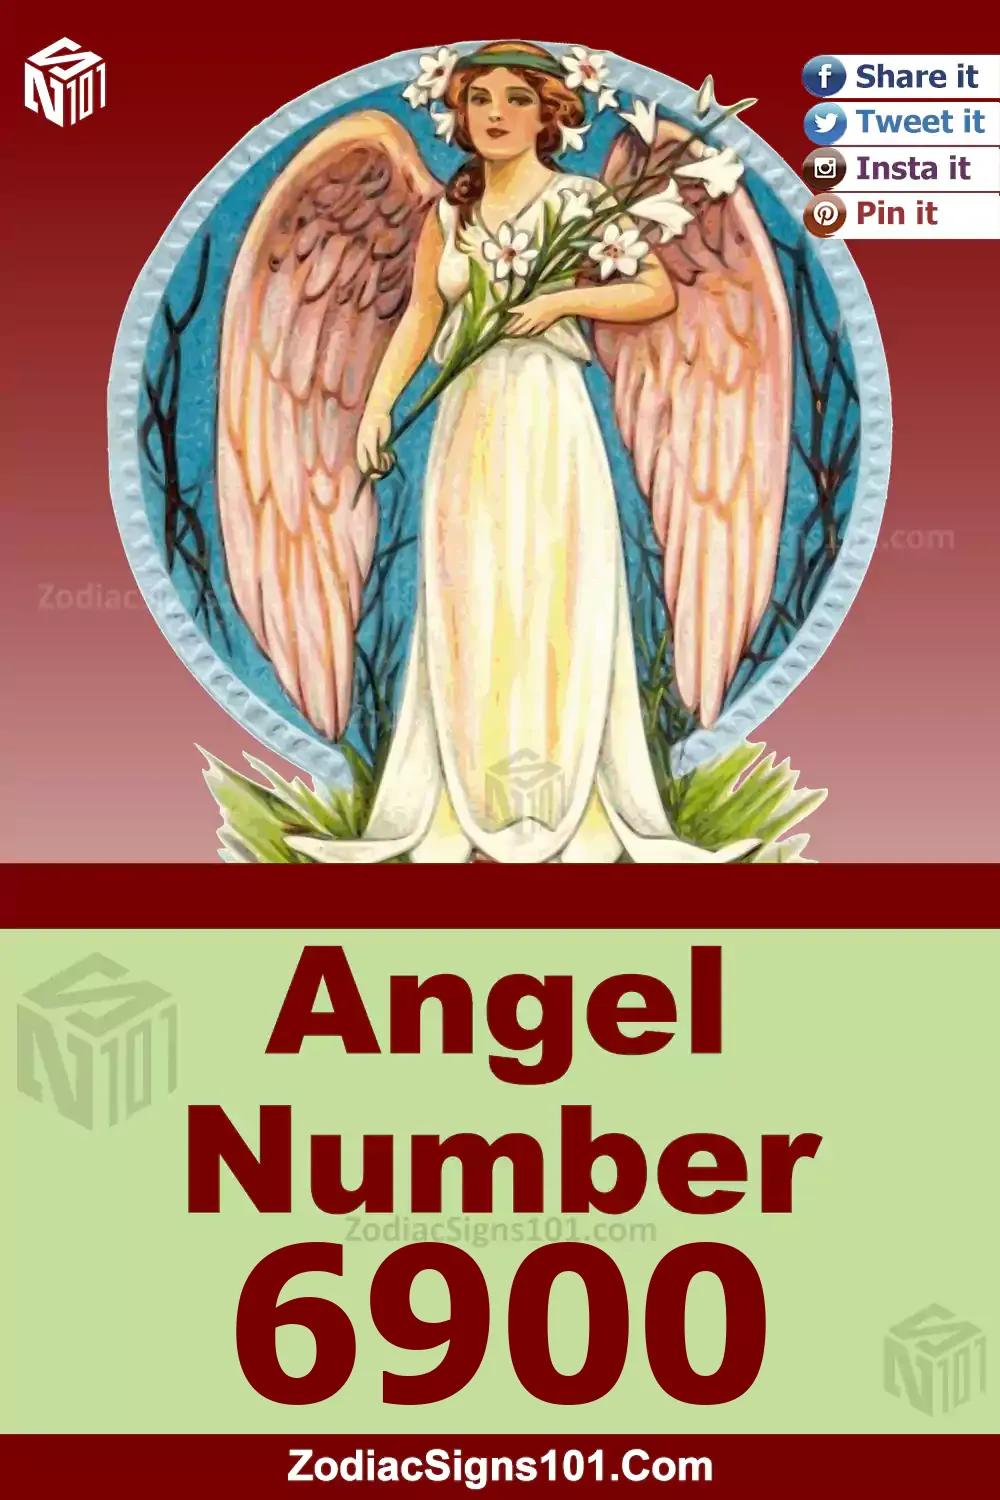 6900-Angel-Number-Meaning.jpg